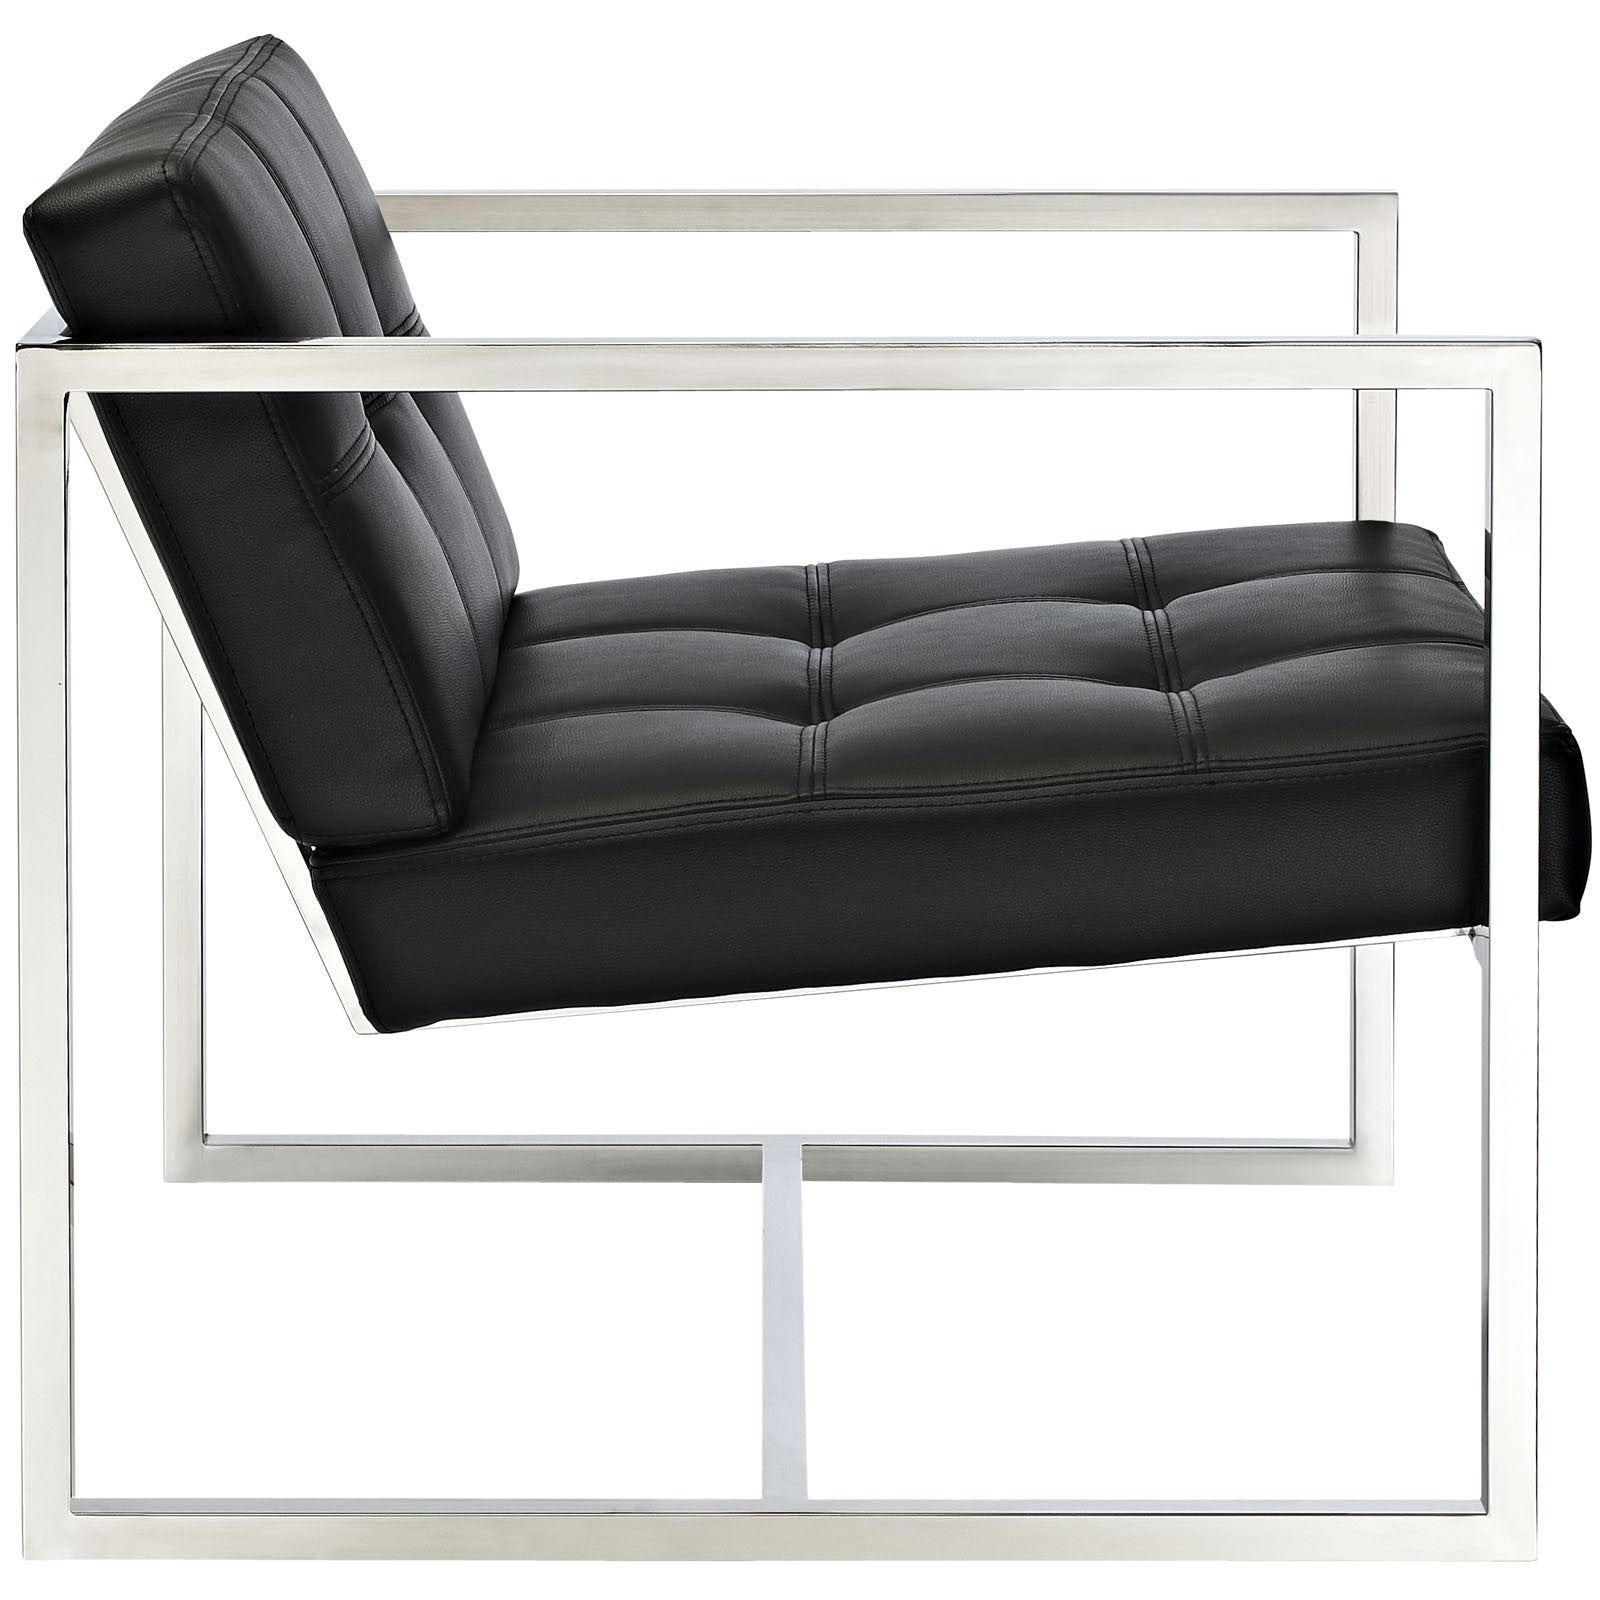  Hoki  Lounge Chair  Black Froy com